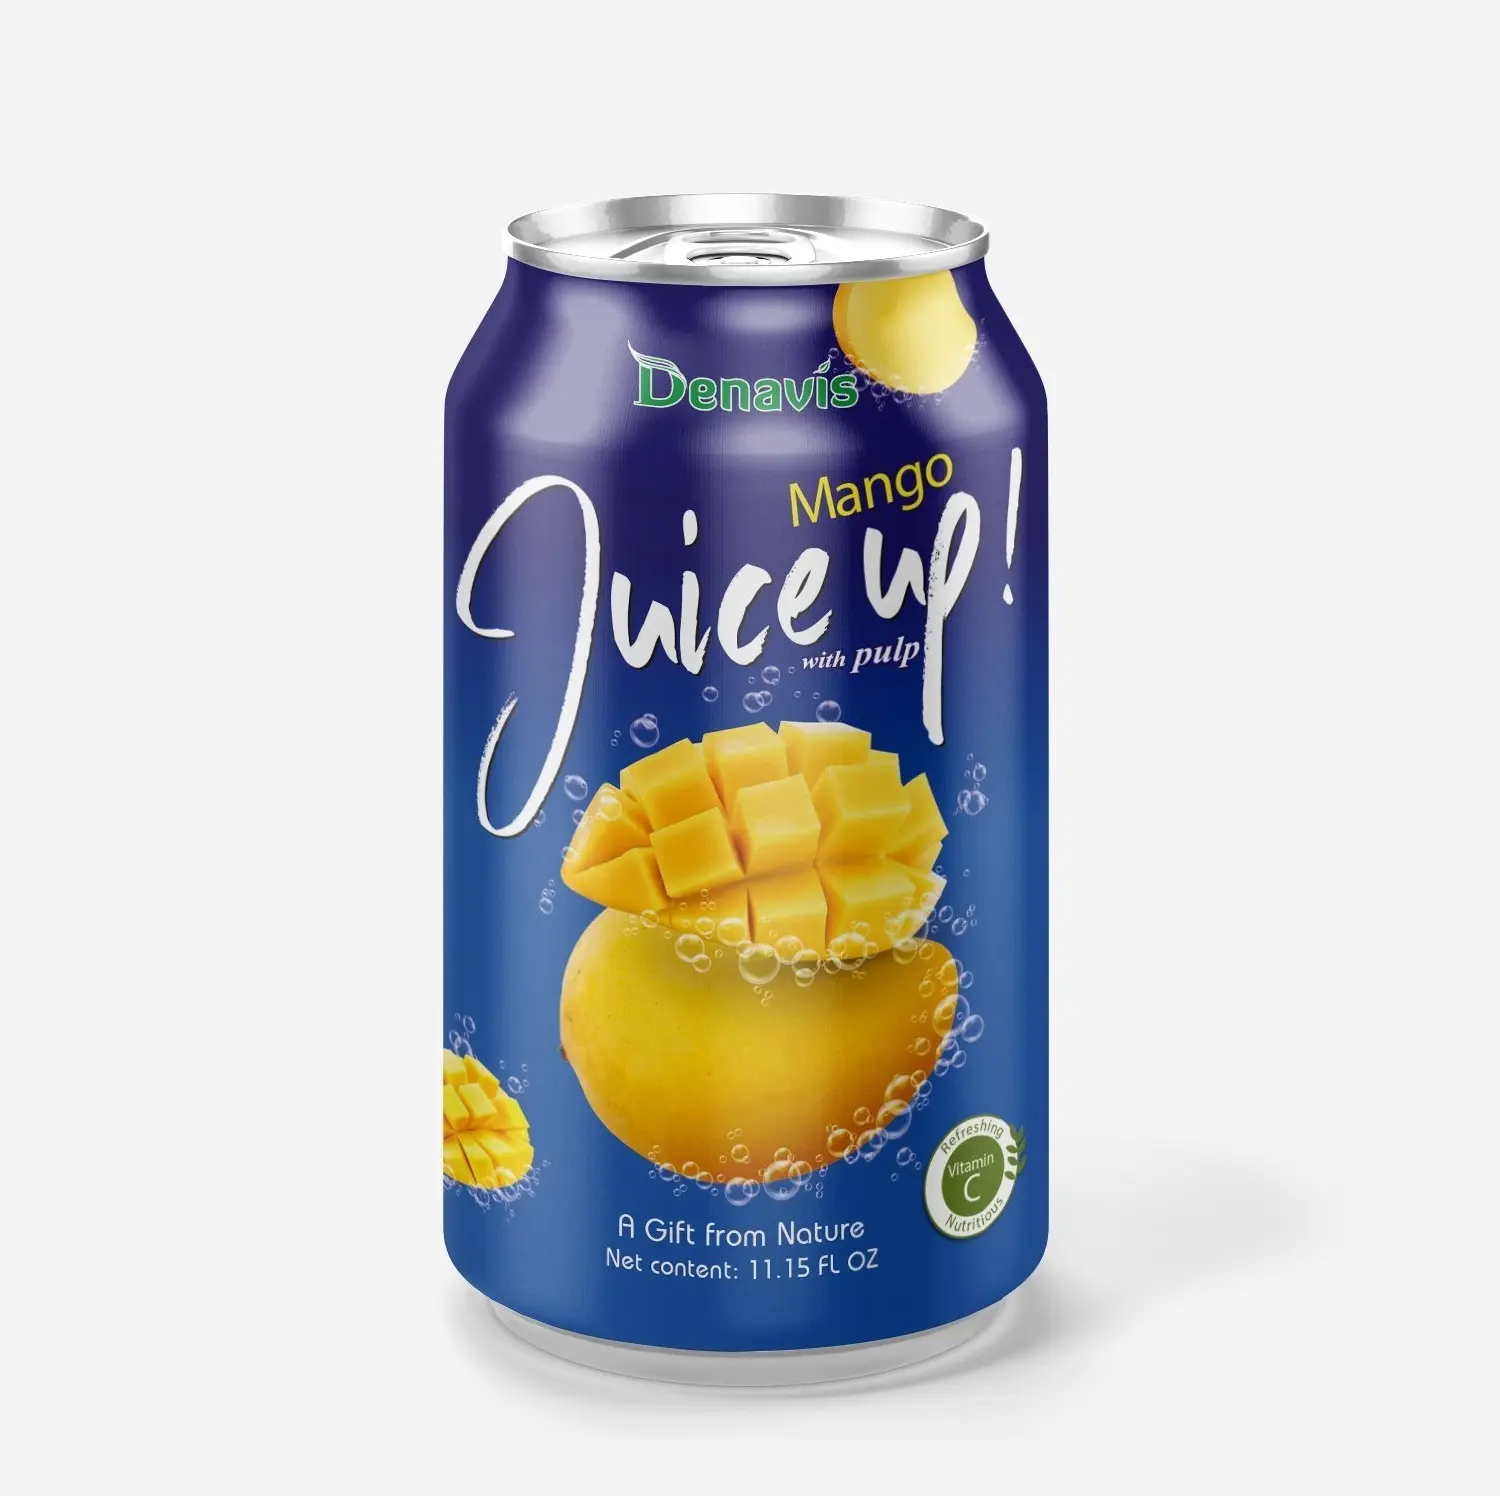 Mango Juice Fruit Drinks 330ml can - Denavis Brand or OEM Private Label - Best Price Manufacturer